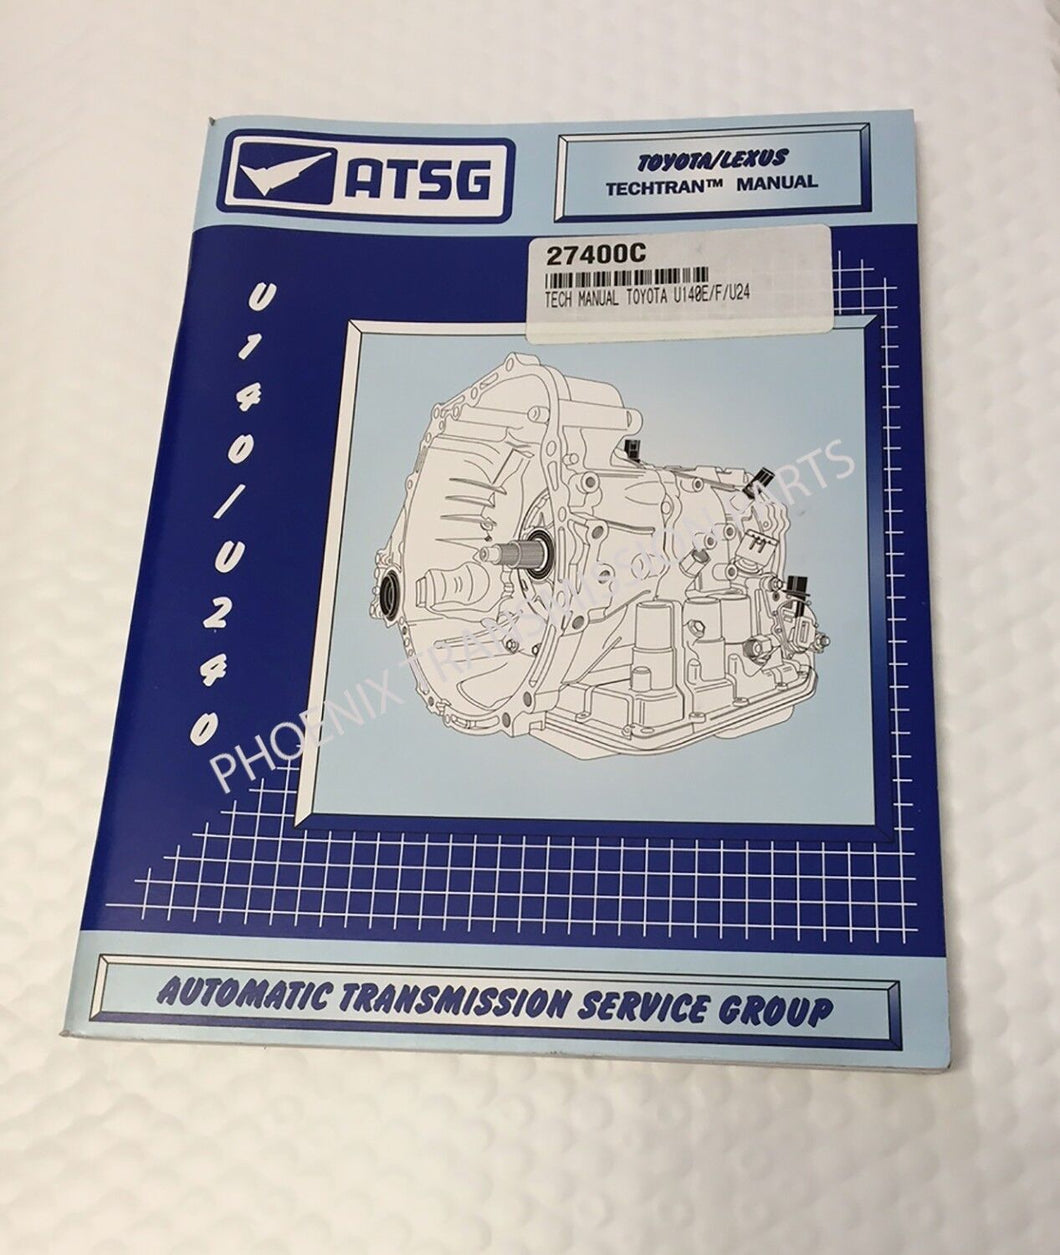 U140 U240 Transmission ATSG Technical Service & Repair Manual for Toyota Lexus